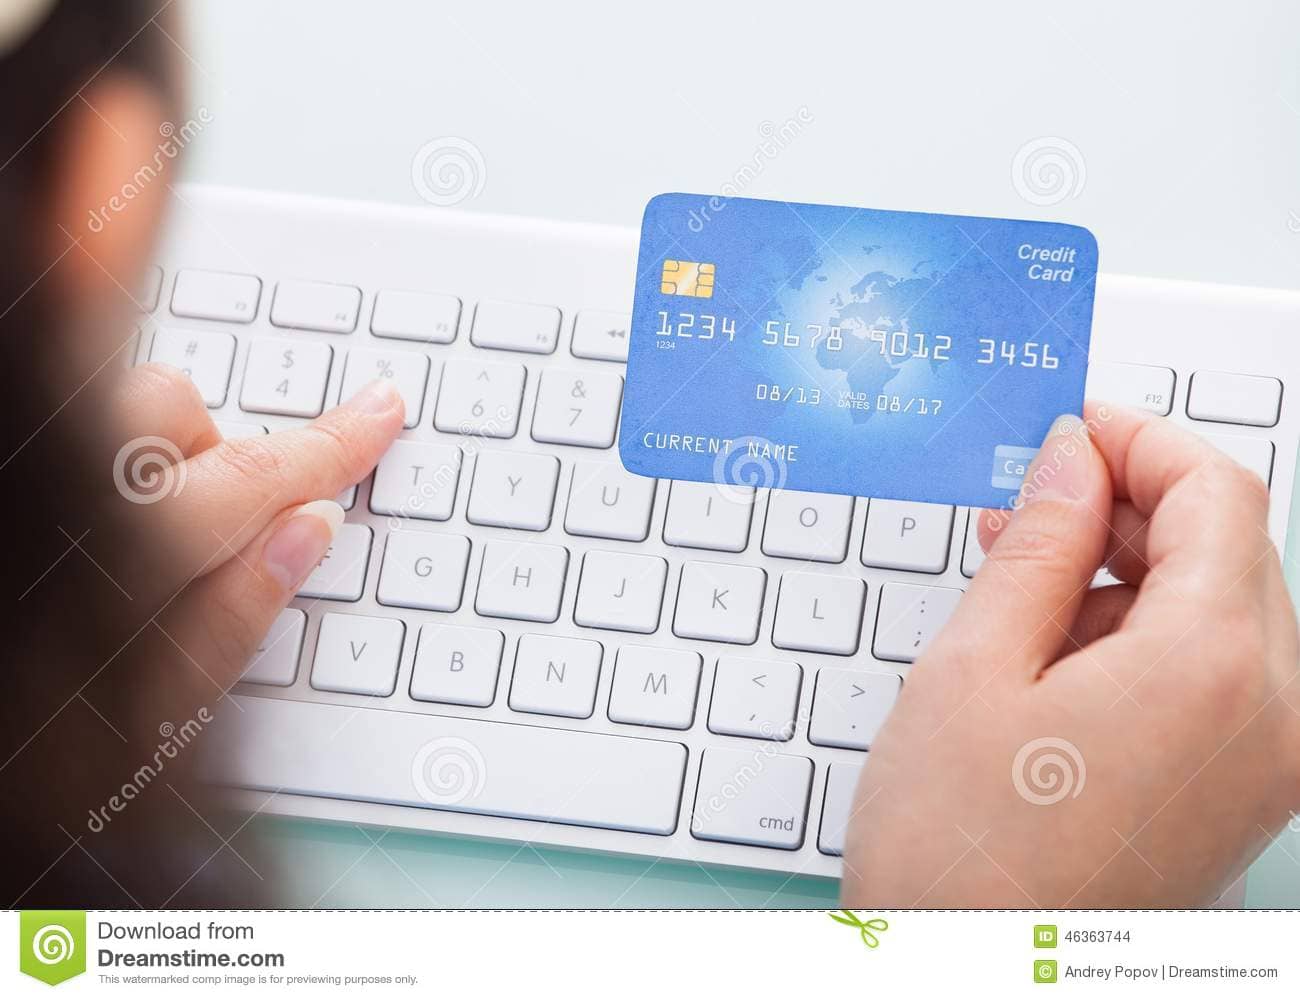 woman entering credit card information